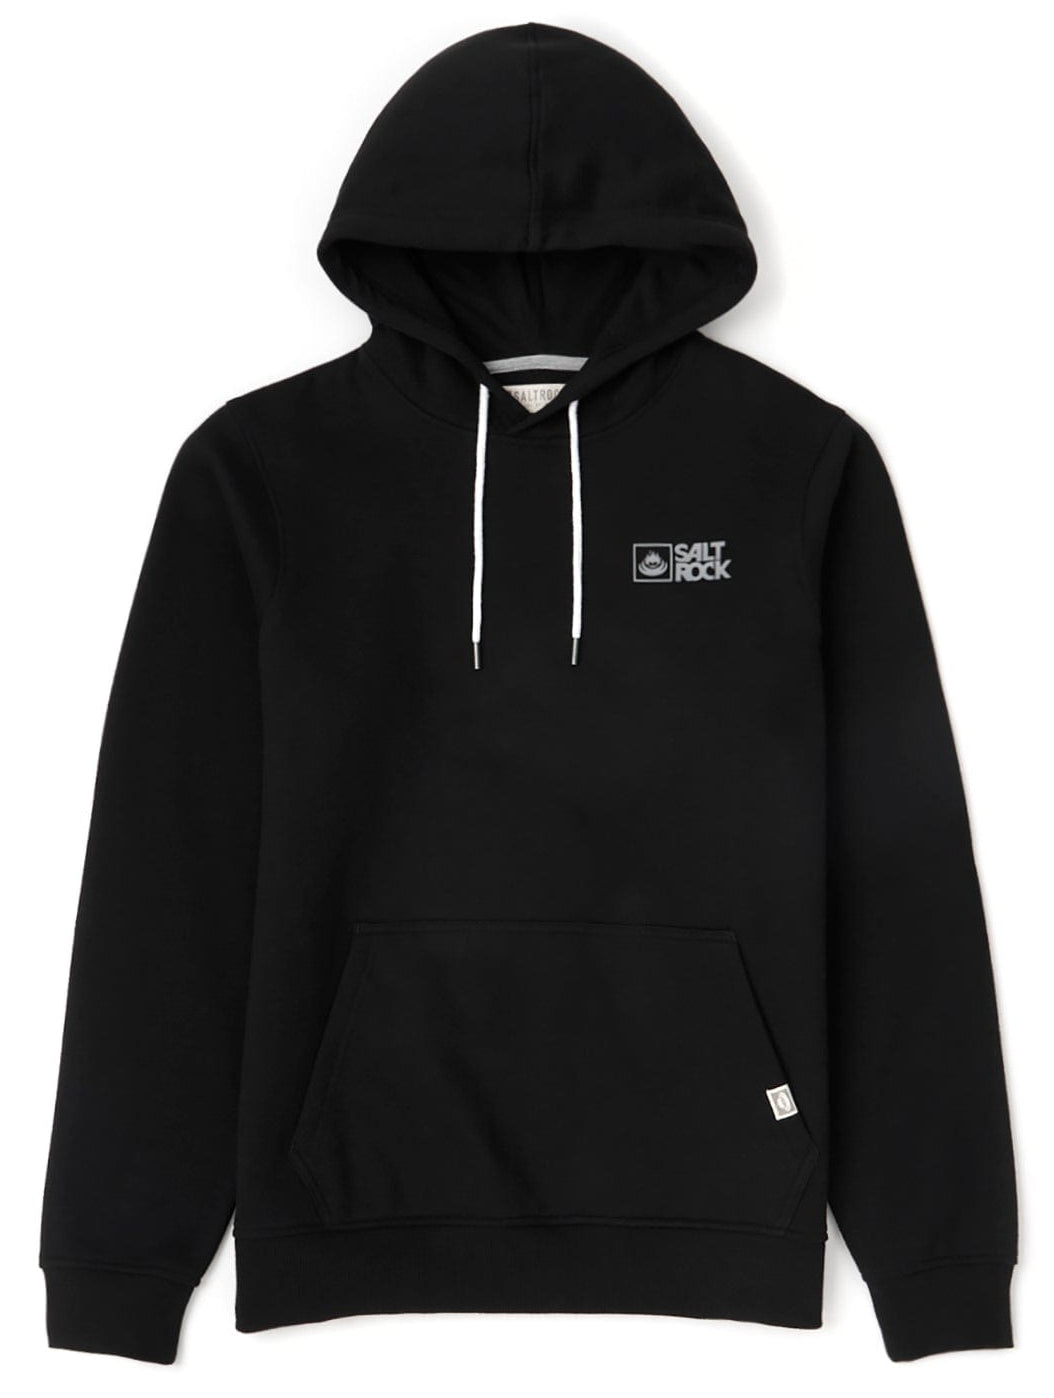 Men's Saltrock Original popover style hoodie in plain Black with chest logo.